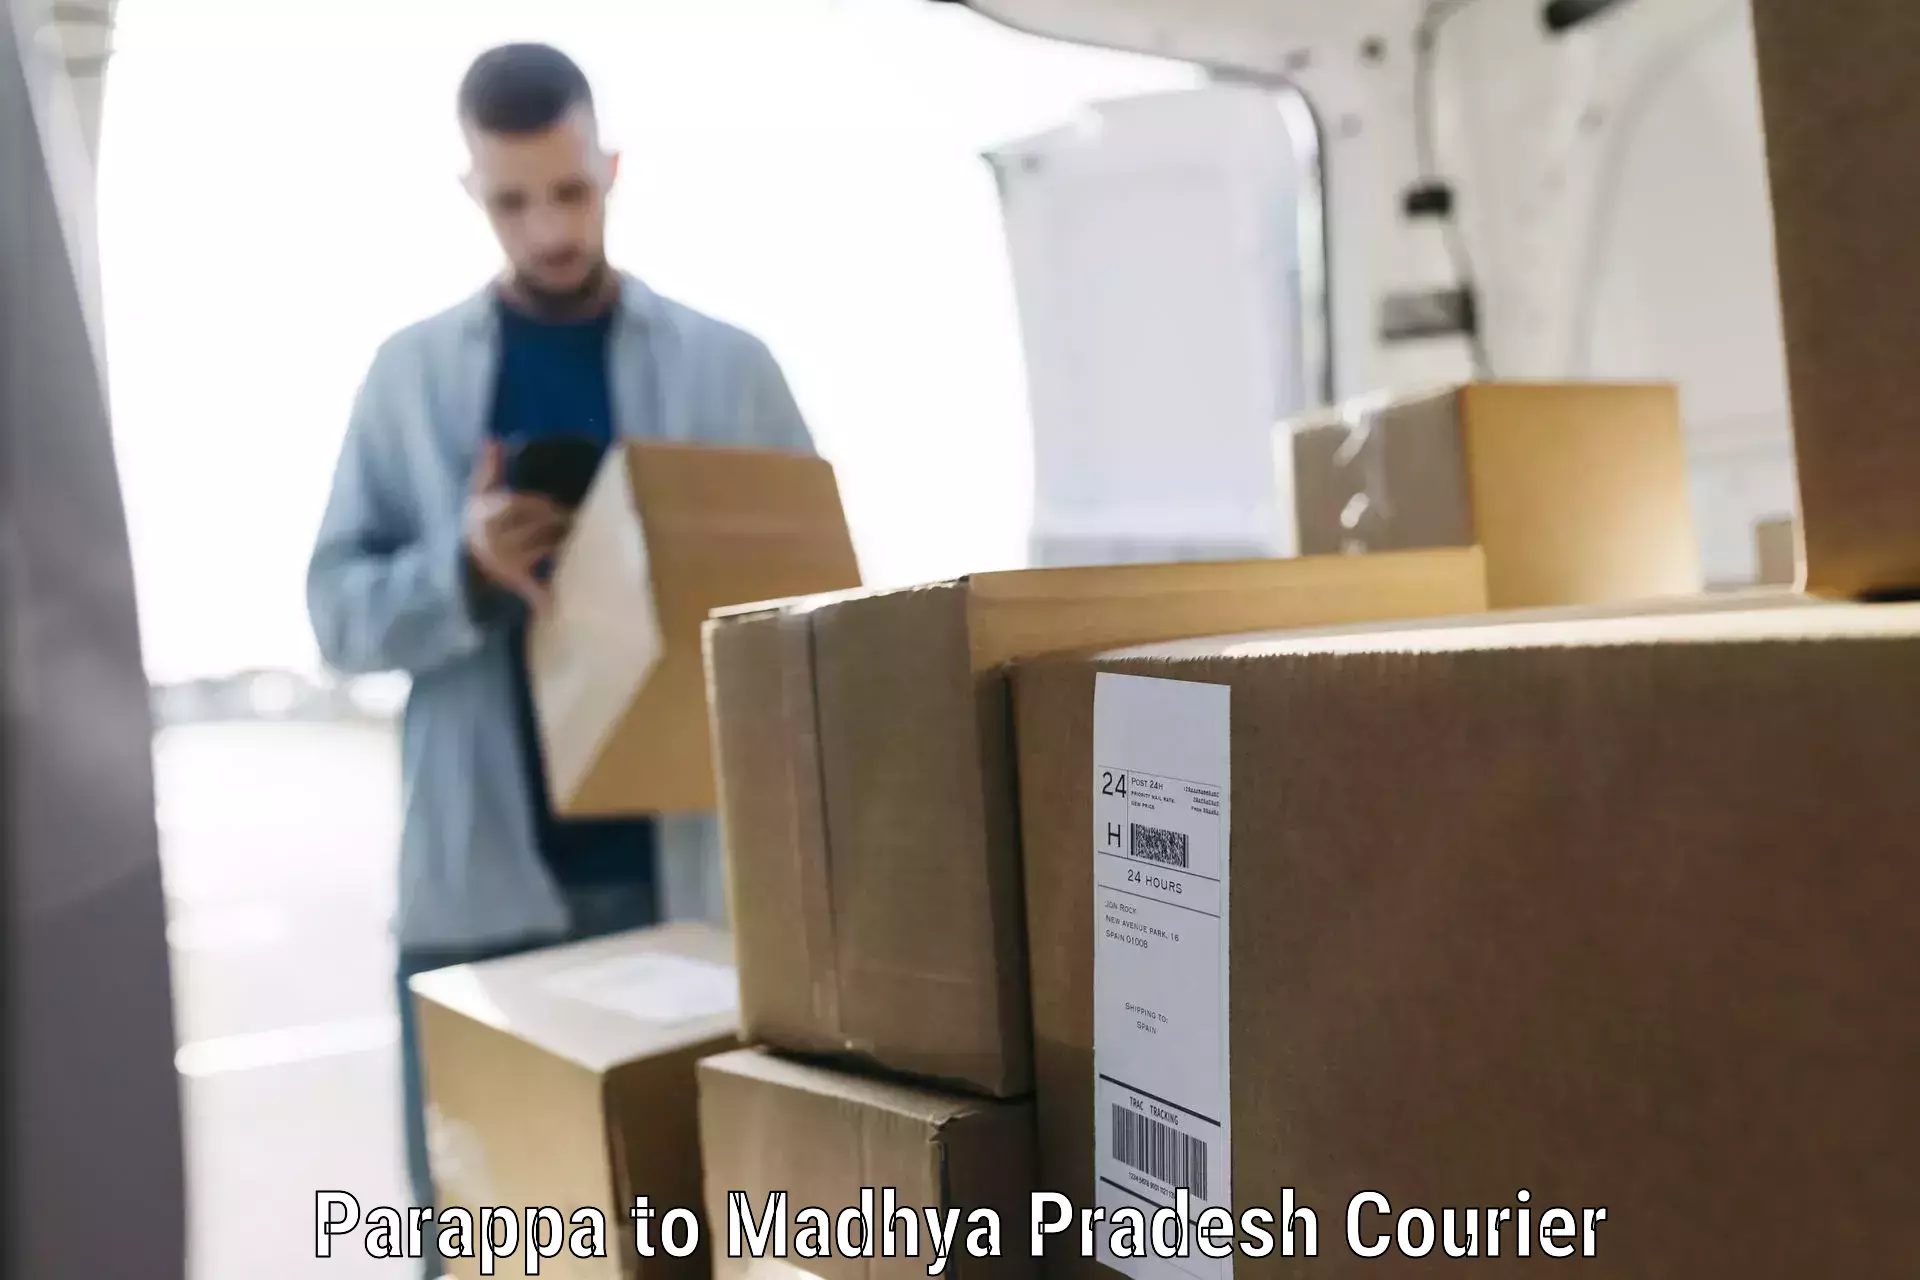 Baggage relocation service Parappa to Vidisha